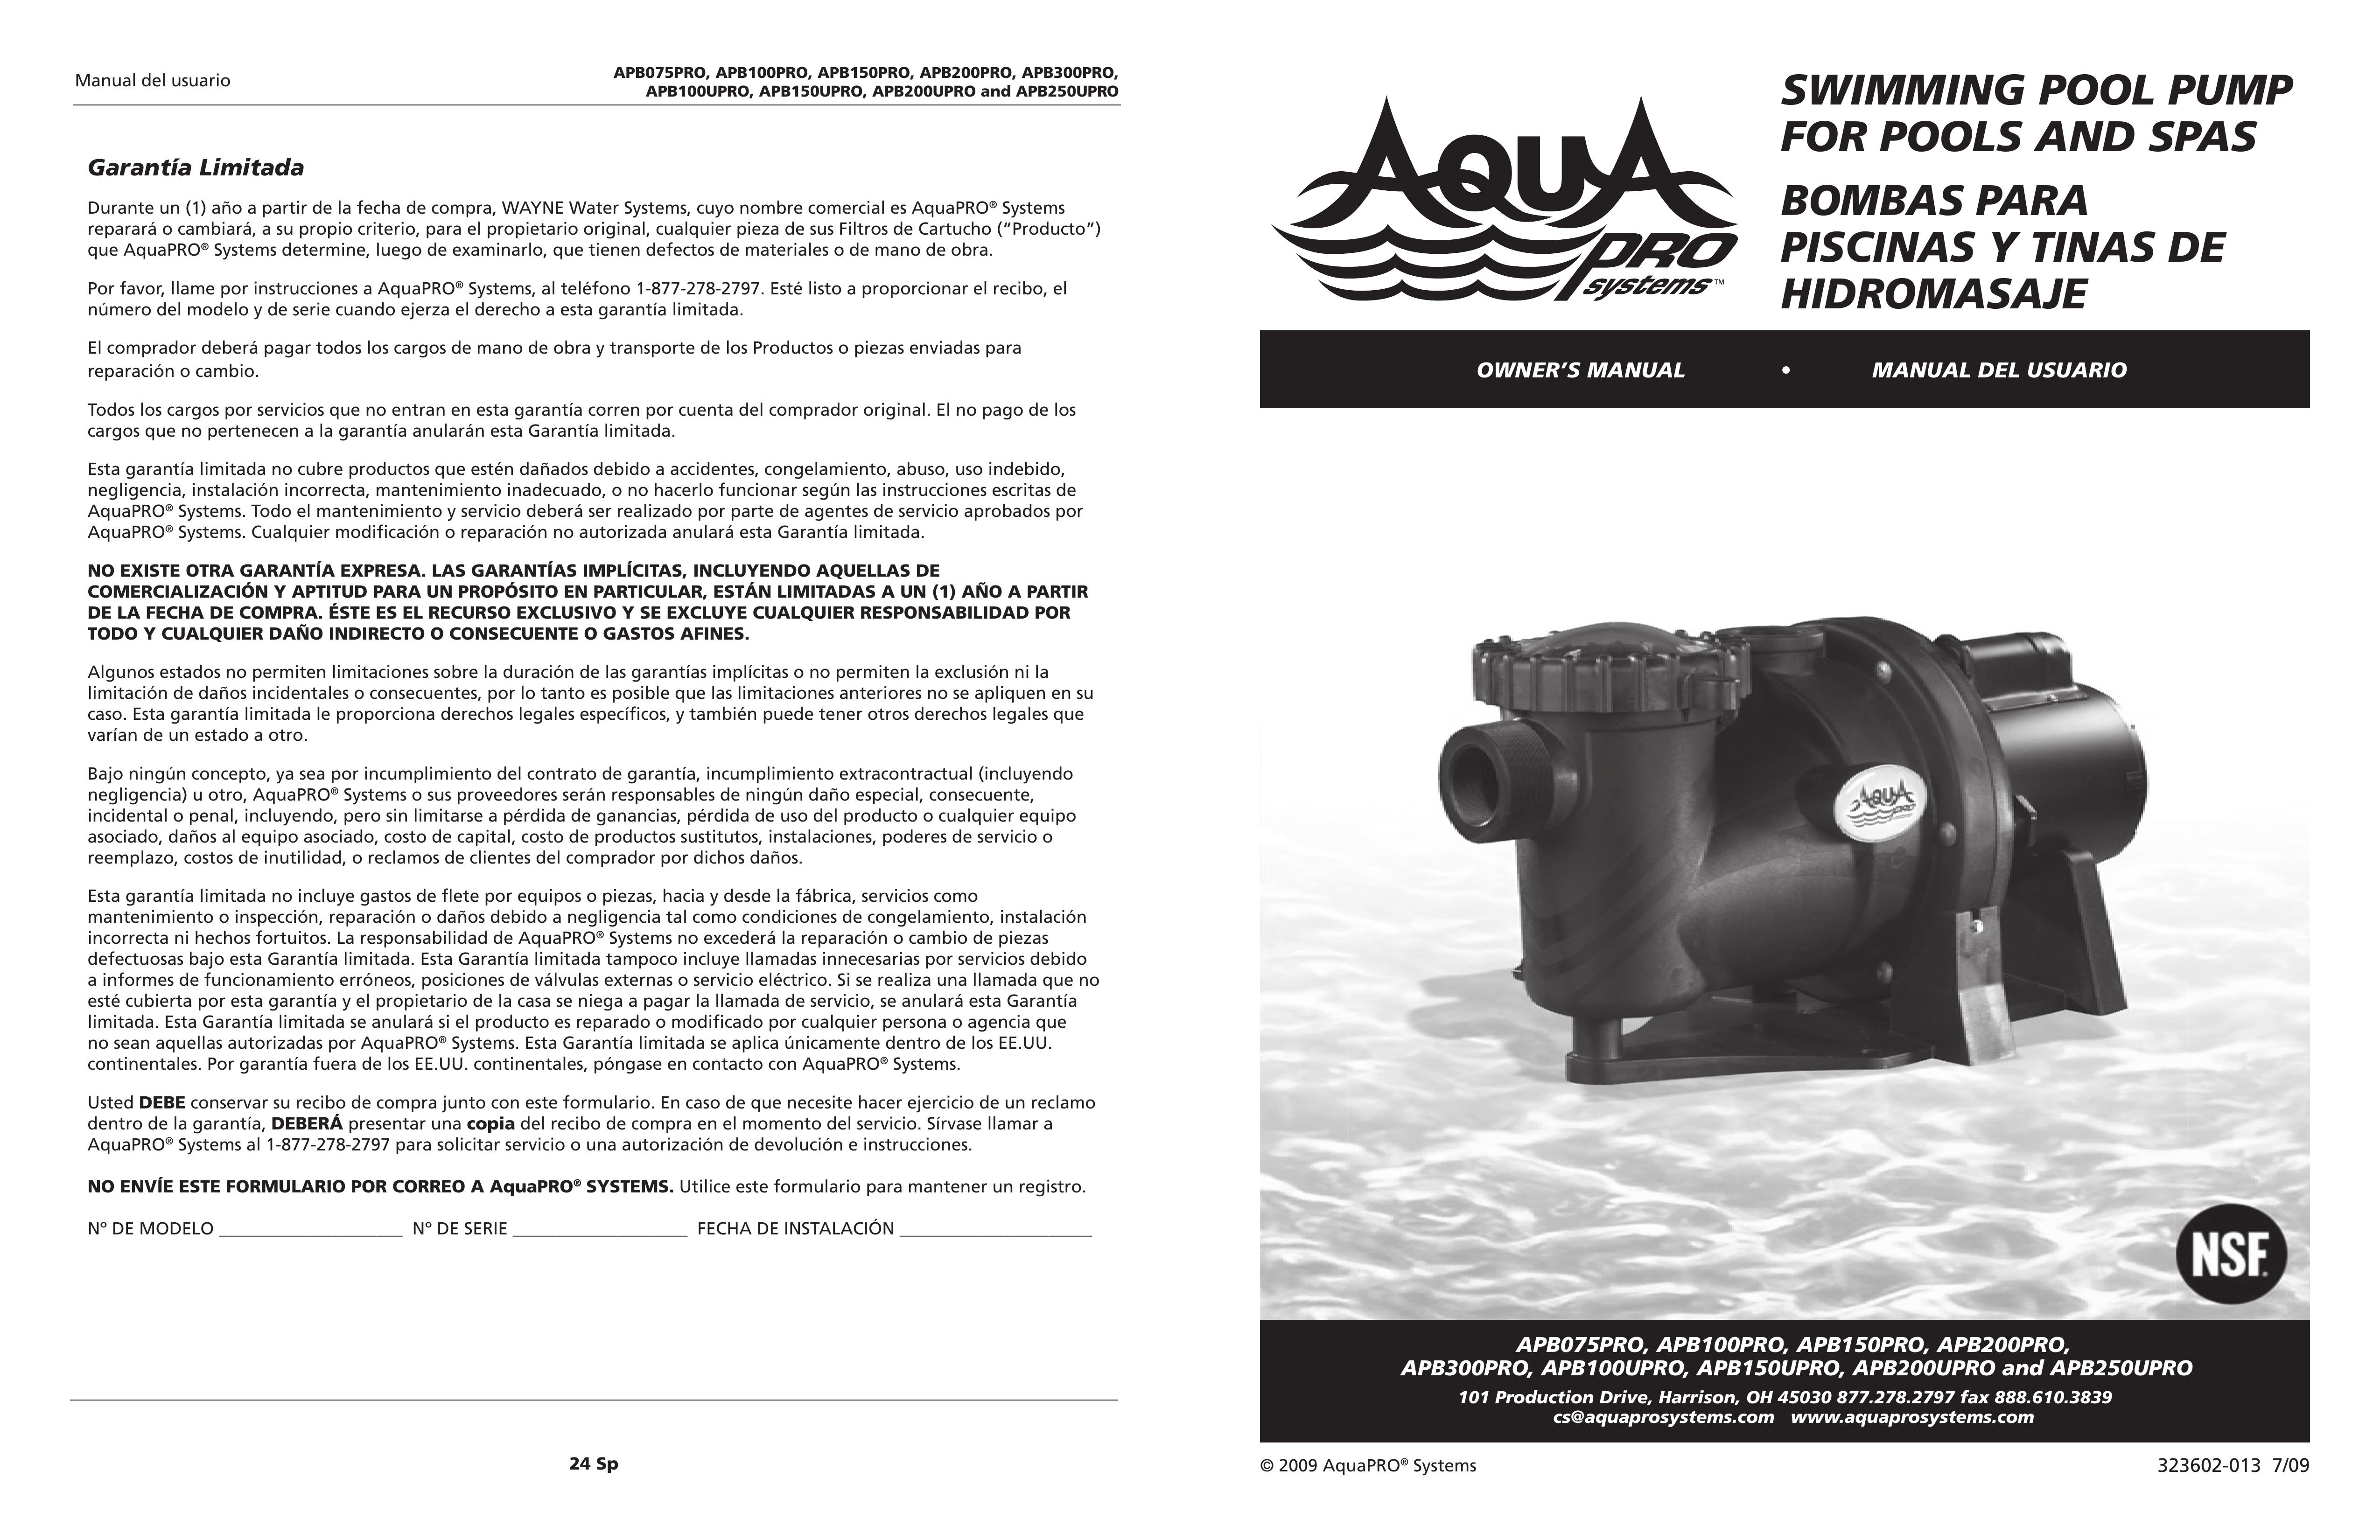 AquaPRO APB200UPRO Swimming Pool Pump User Manual